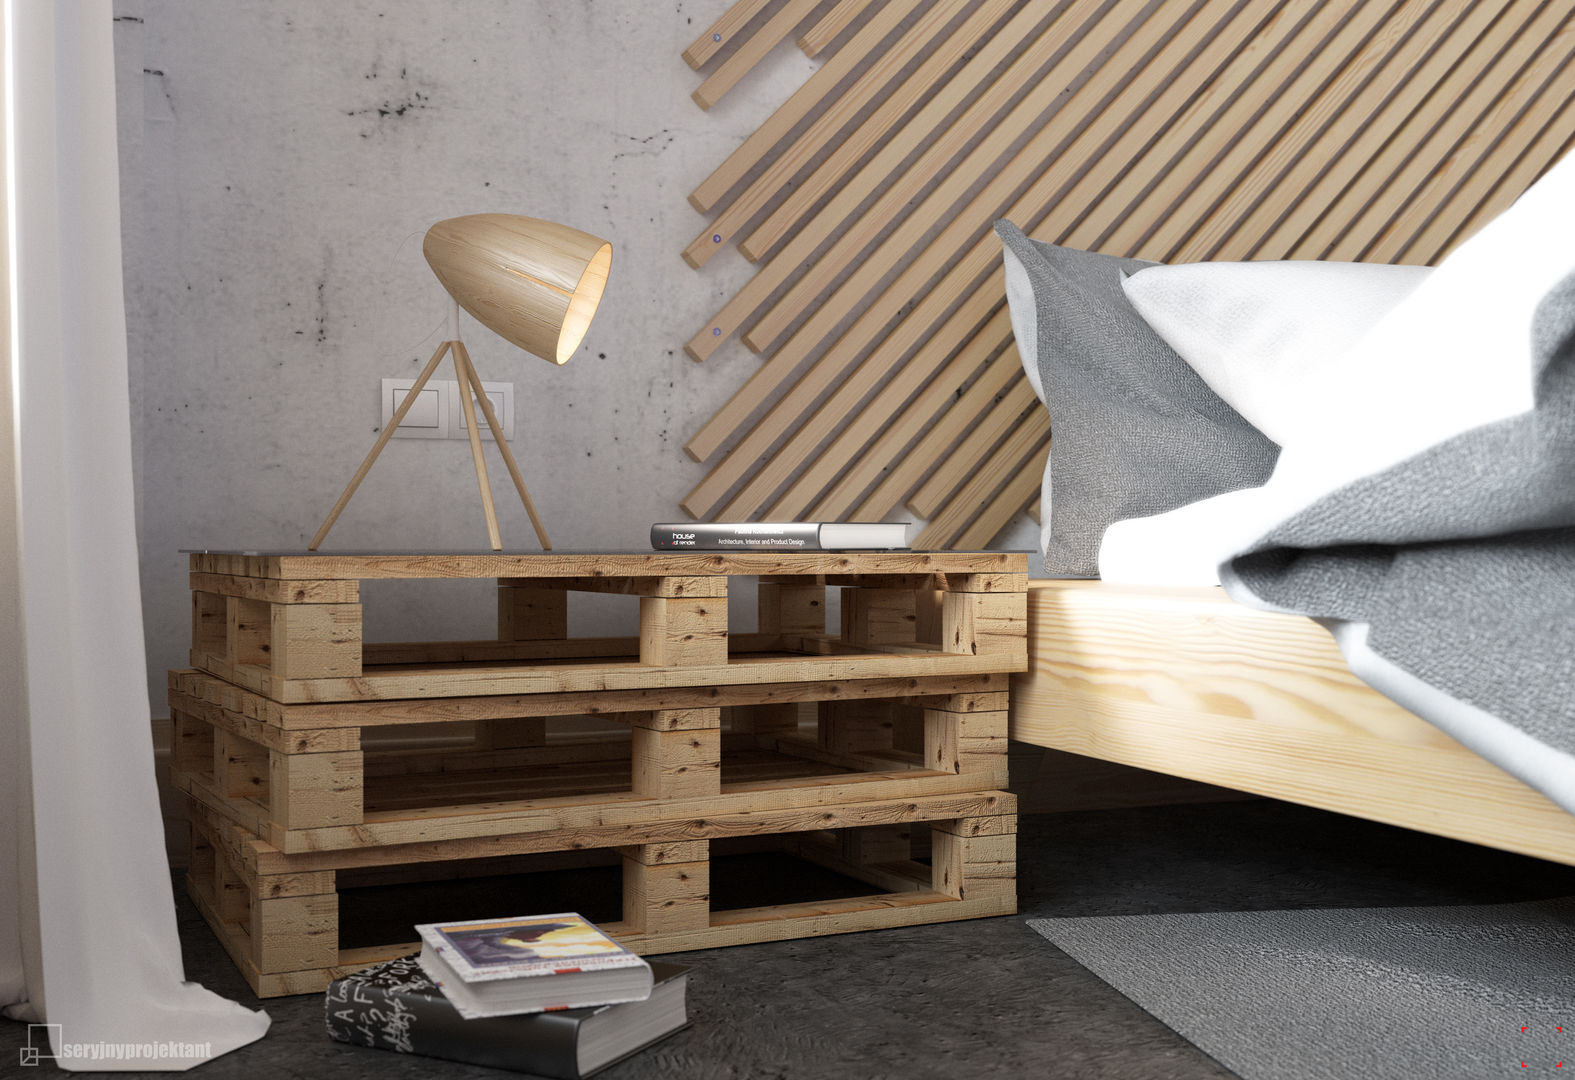 Piece of wood, Seryjny Projektant Seryjny Projektant Industrial style bedroom Bedside tables